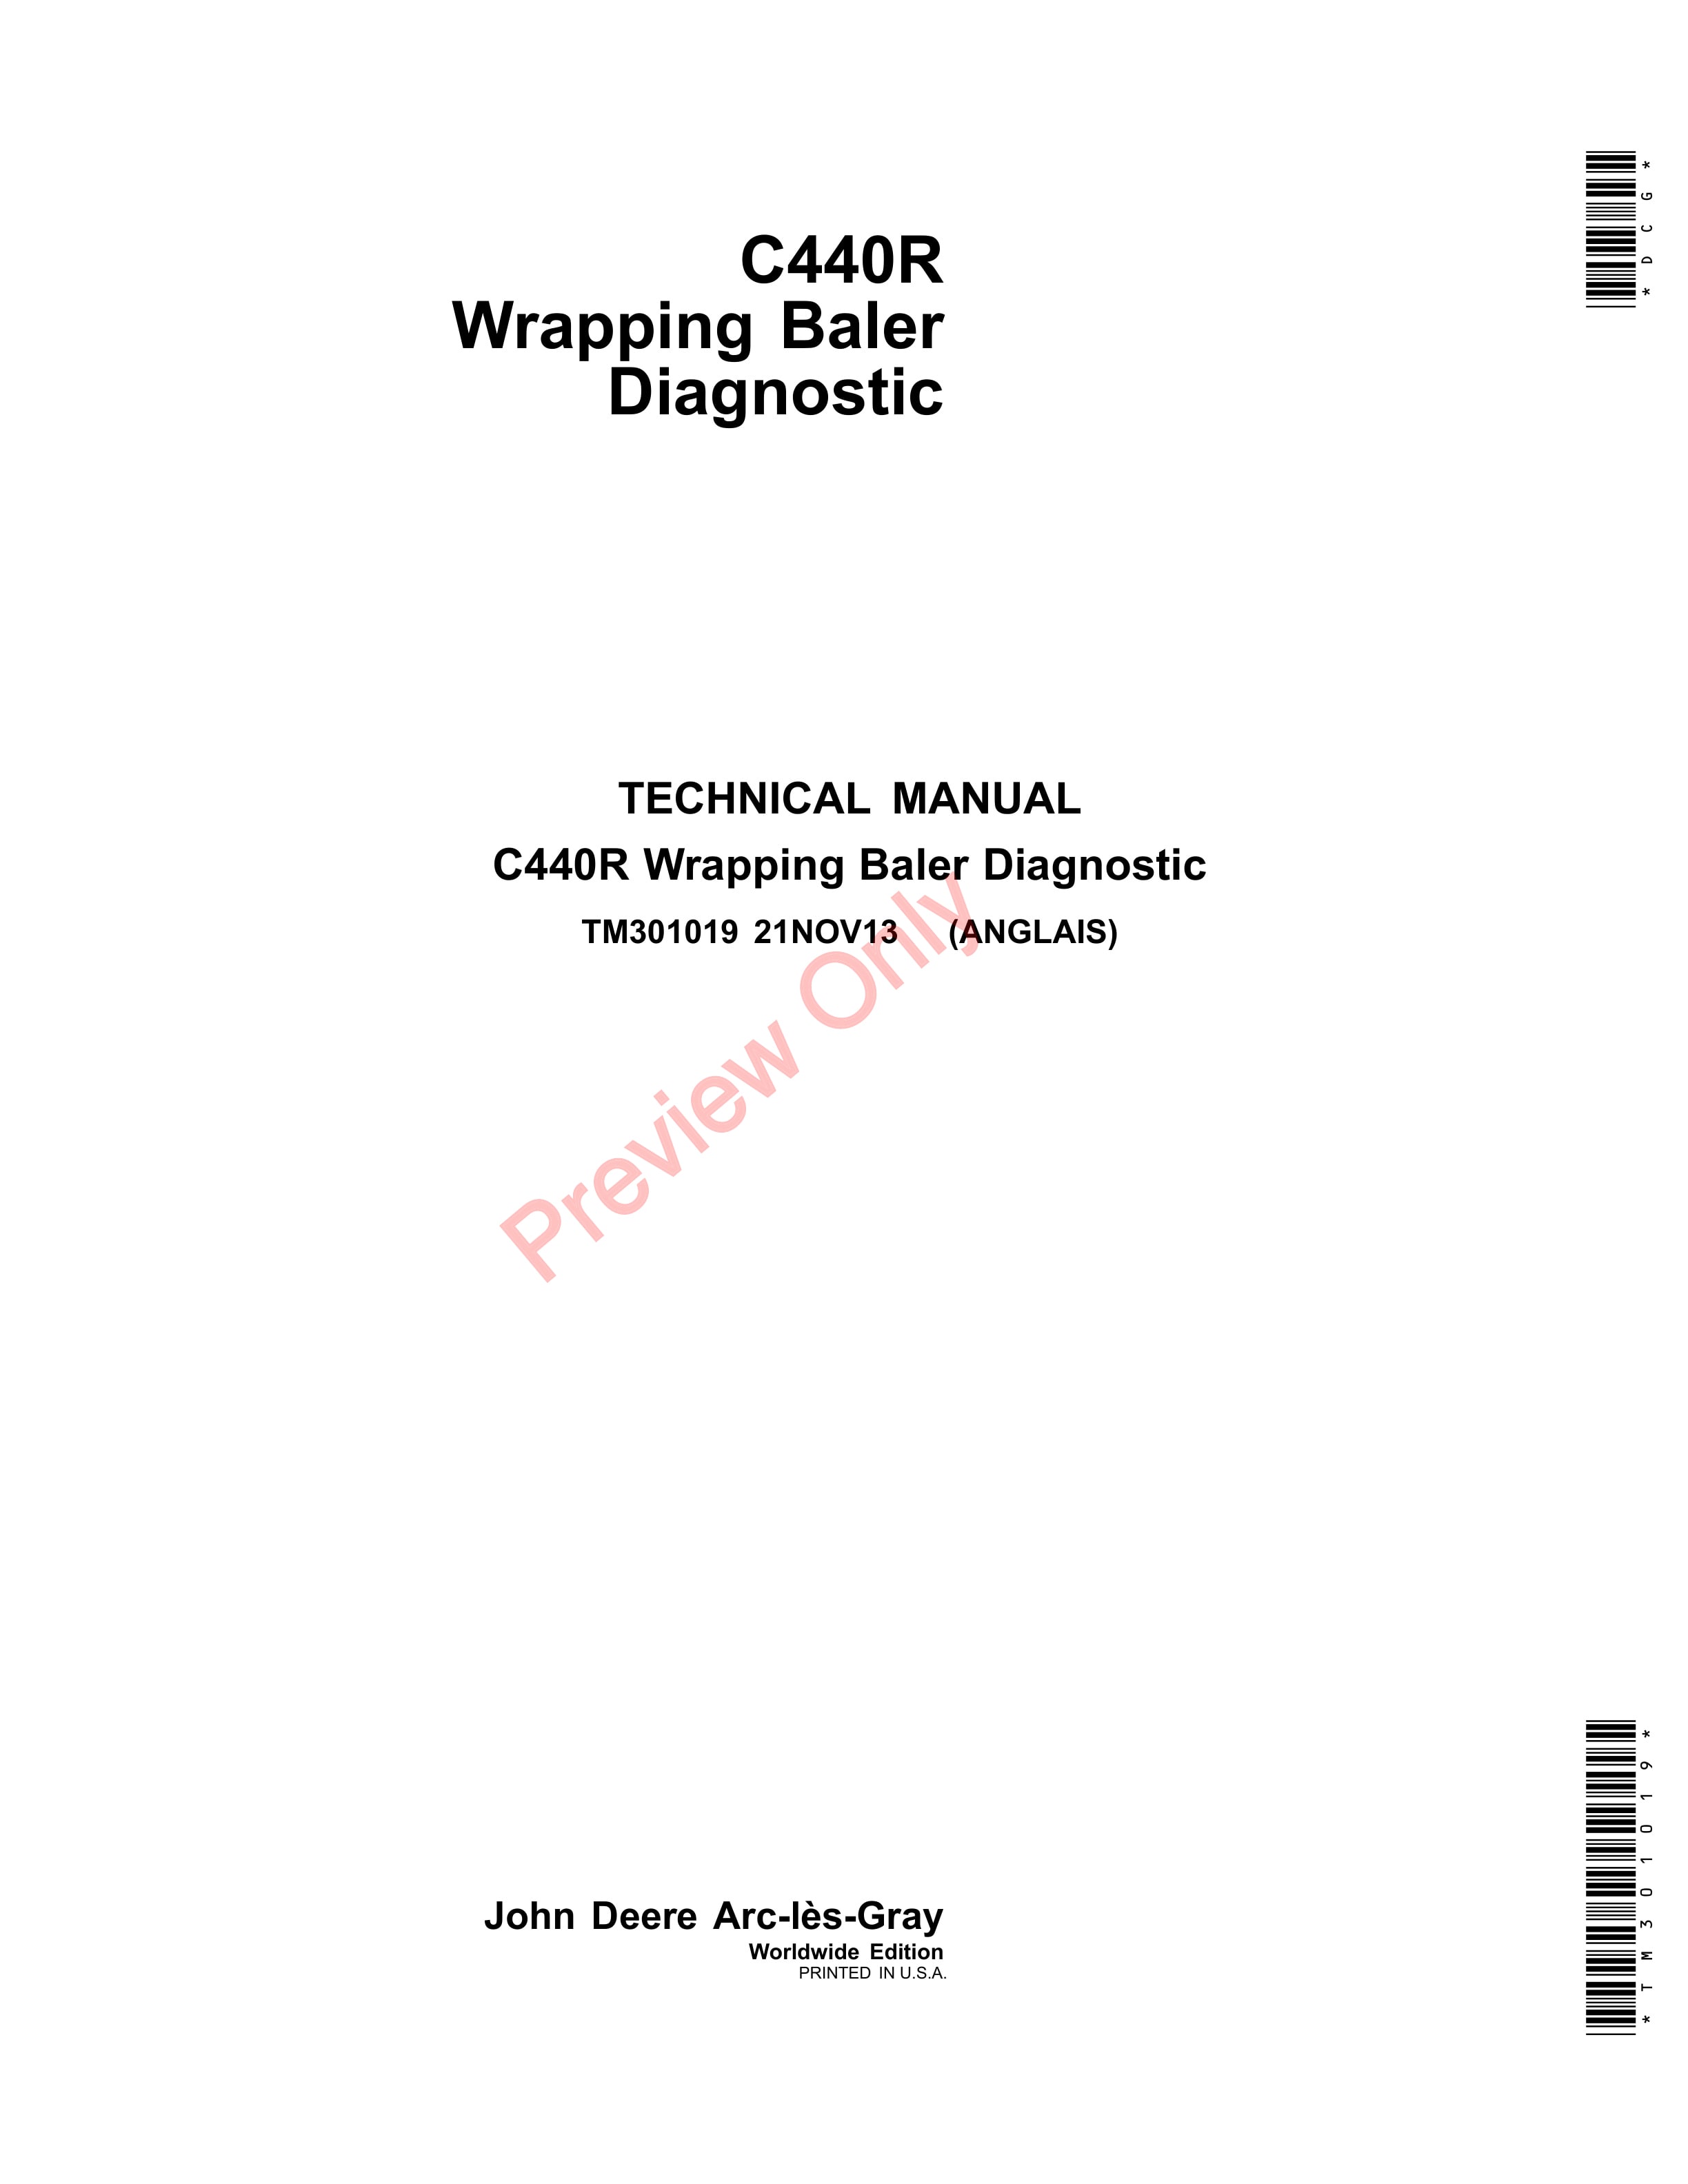 John Deere C440R Wrapping Baler Technical Manual TM301019 21NOV13 1